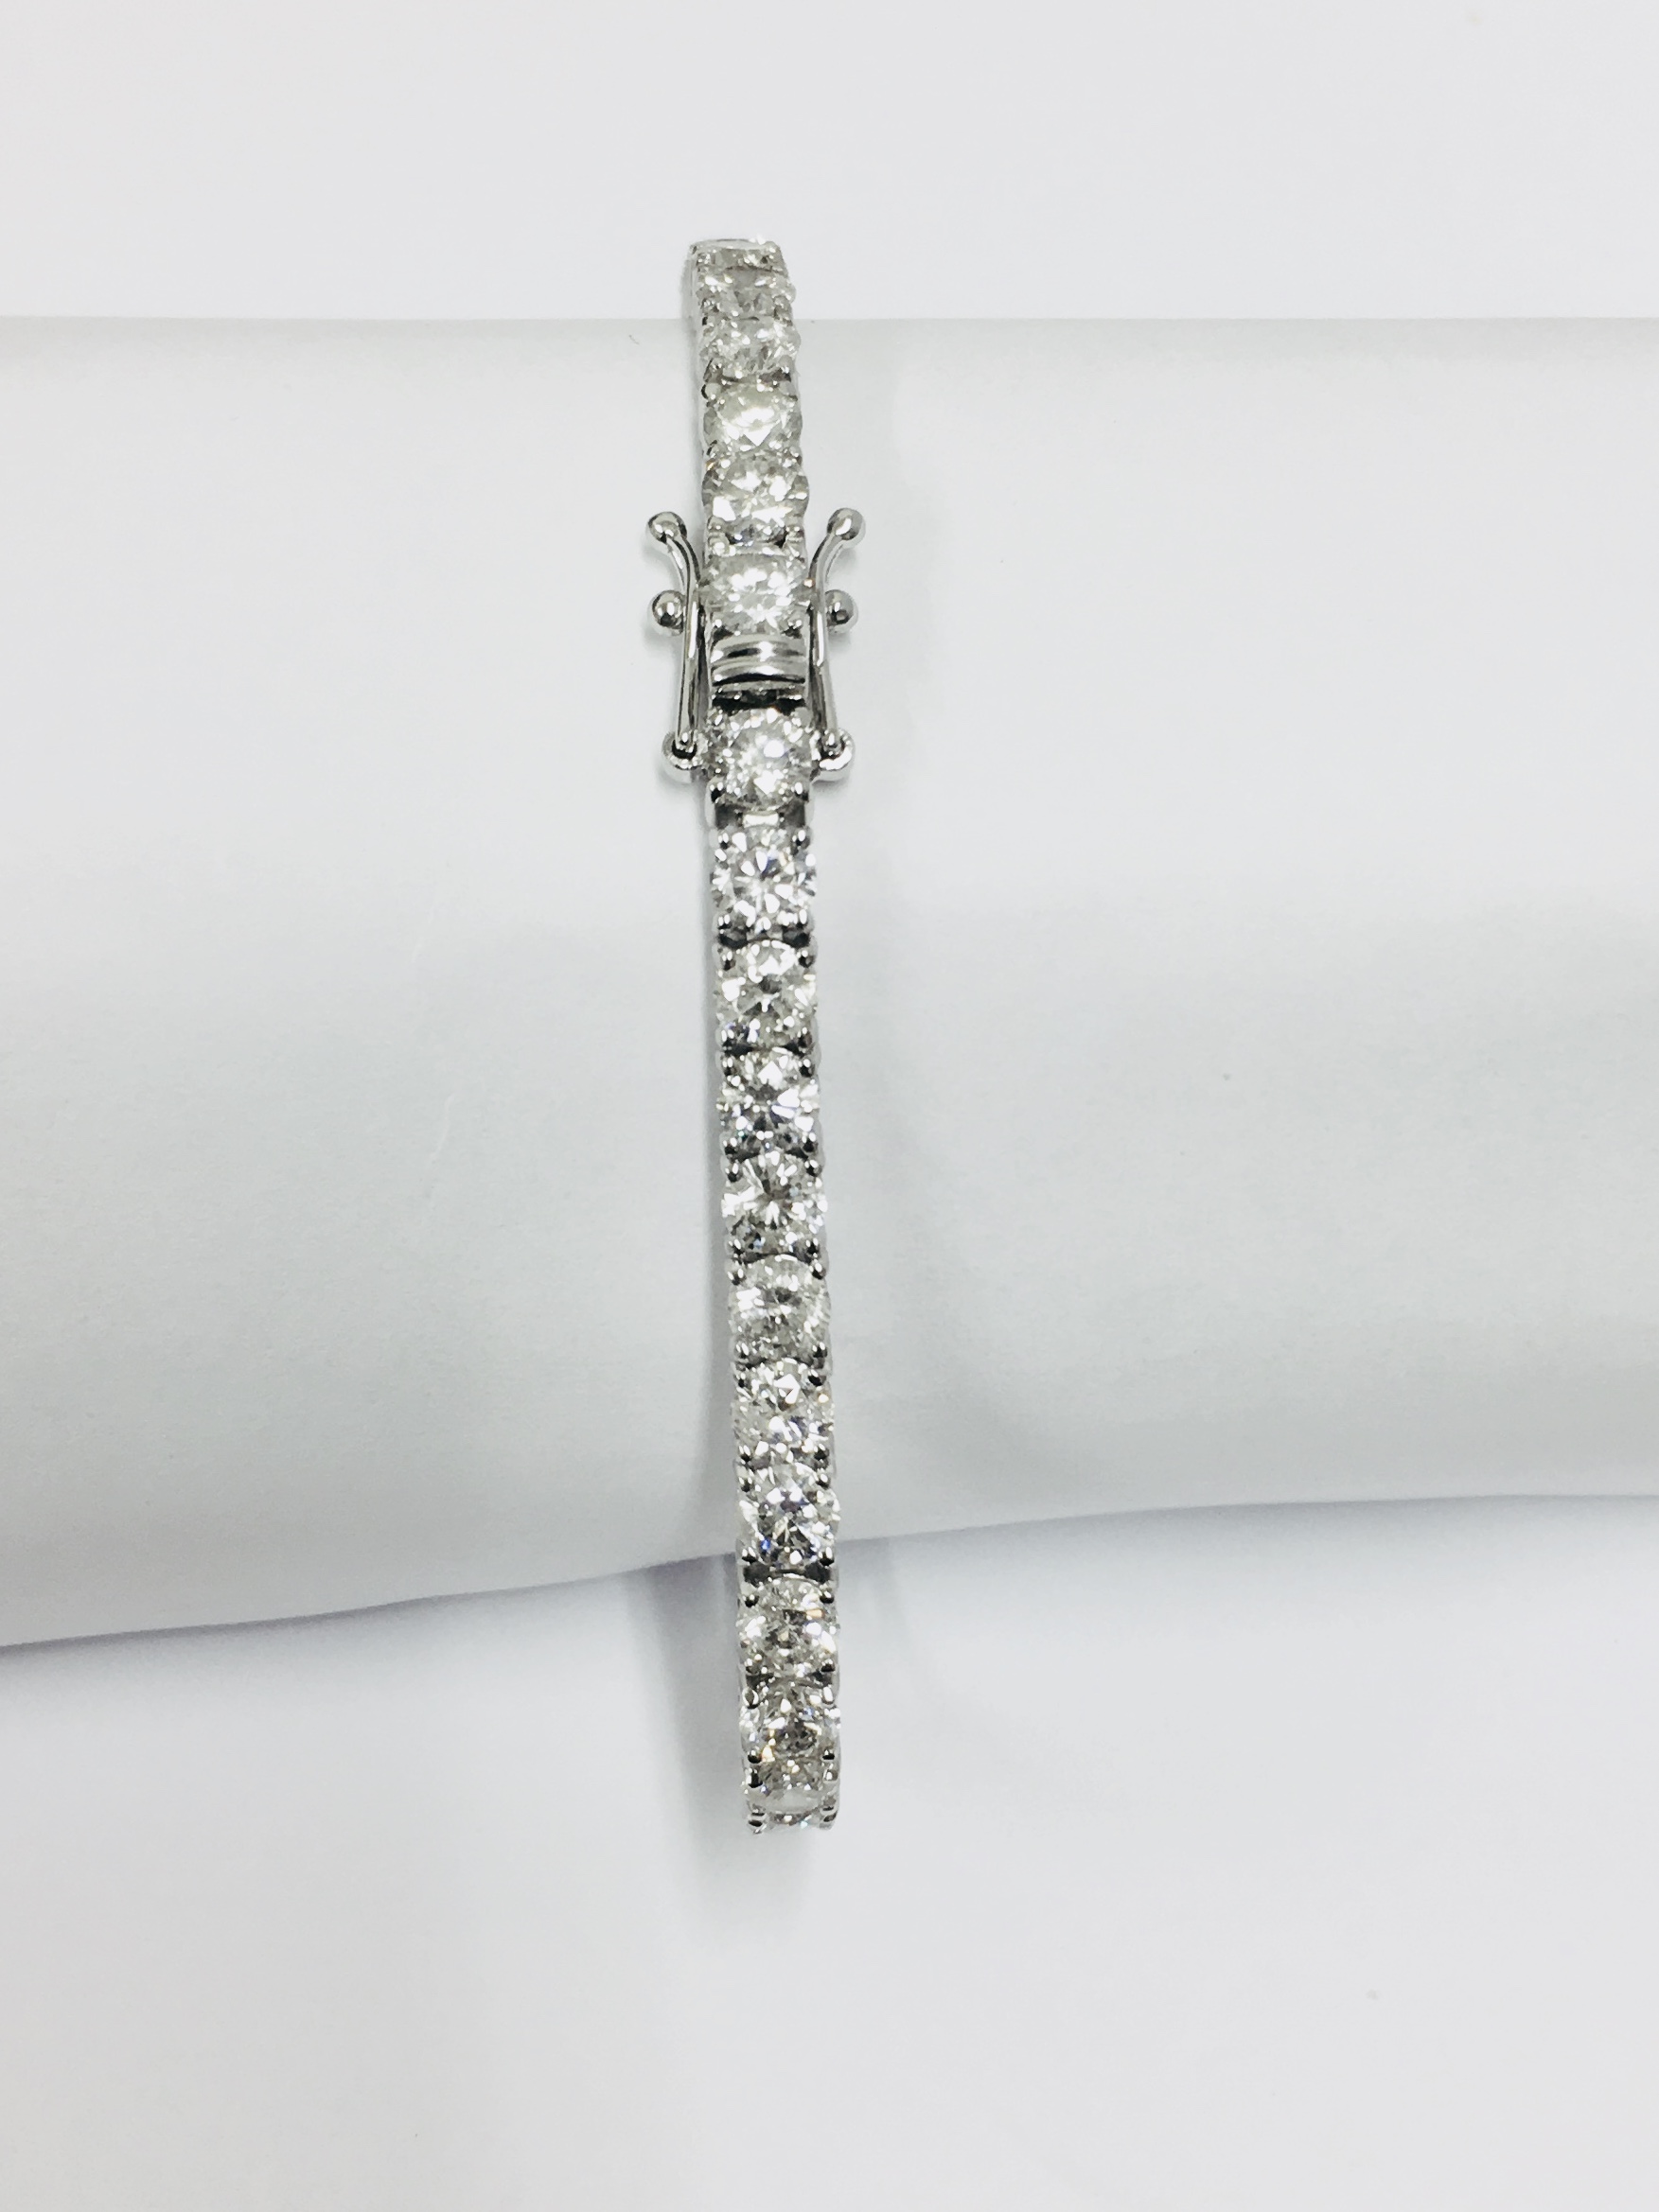 8.00ct Diamond tennis bracelet set with brilliant cut diamonds of G colour - Image 7 of 42